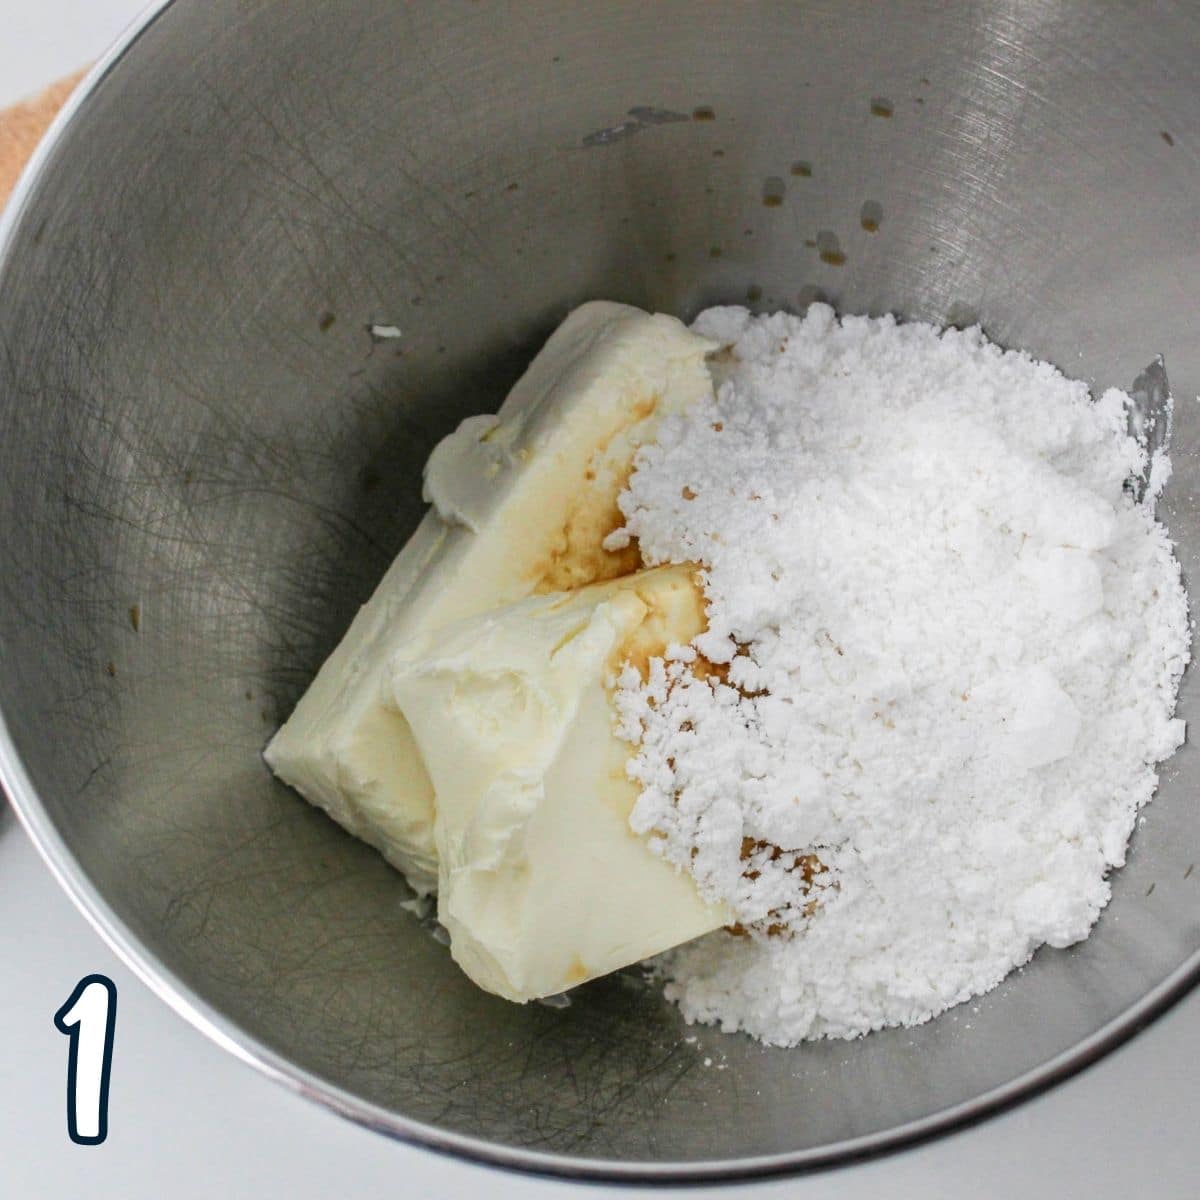 Cream cheese, powdered sugar, and vanilla in a mixing bowl. 